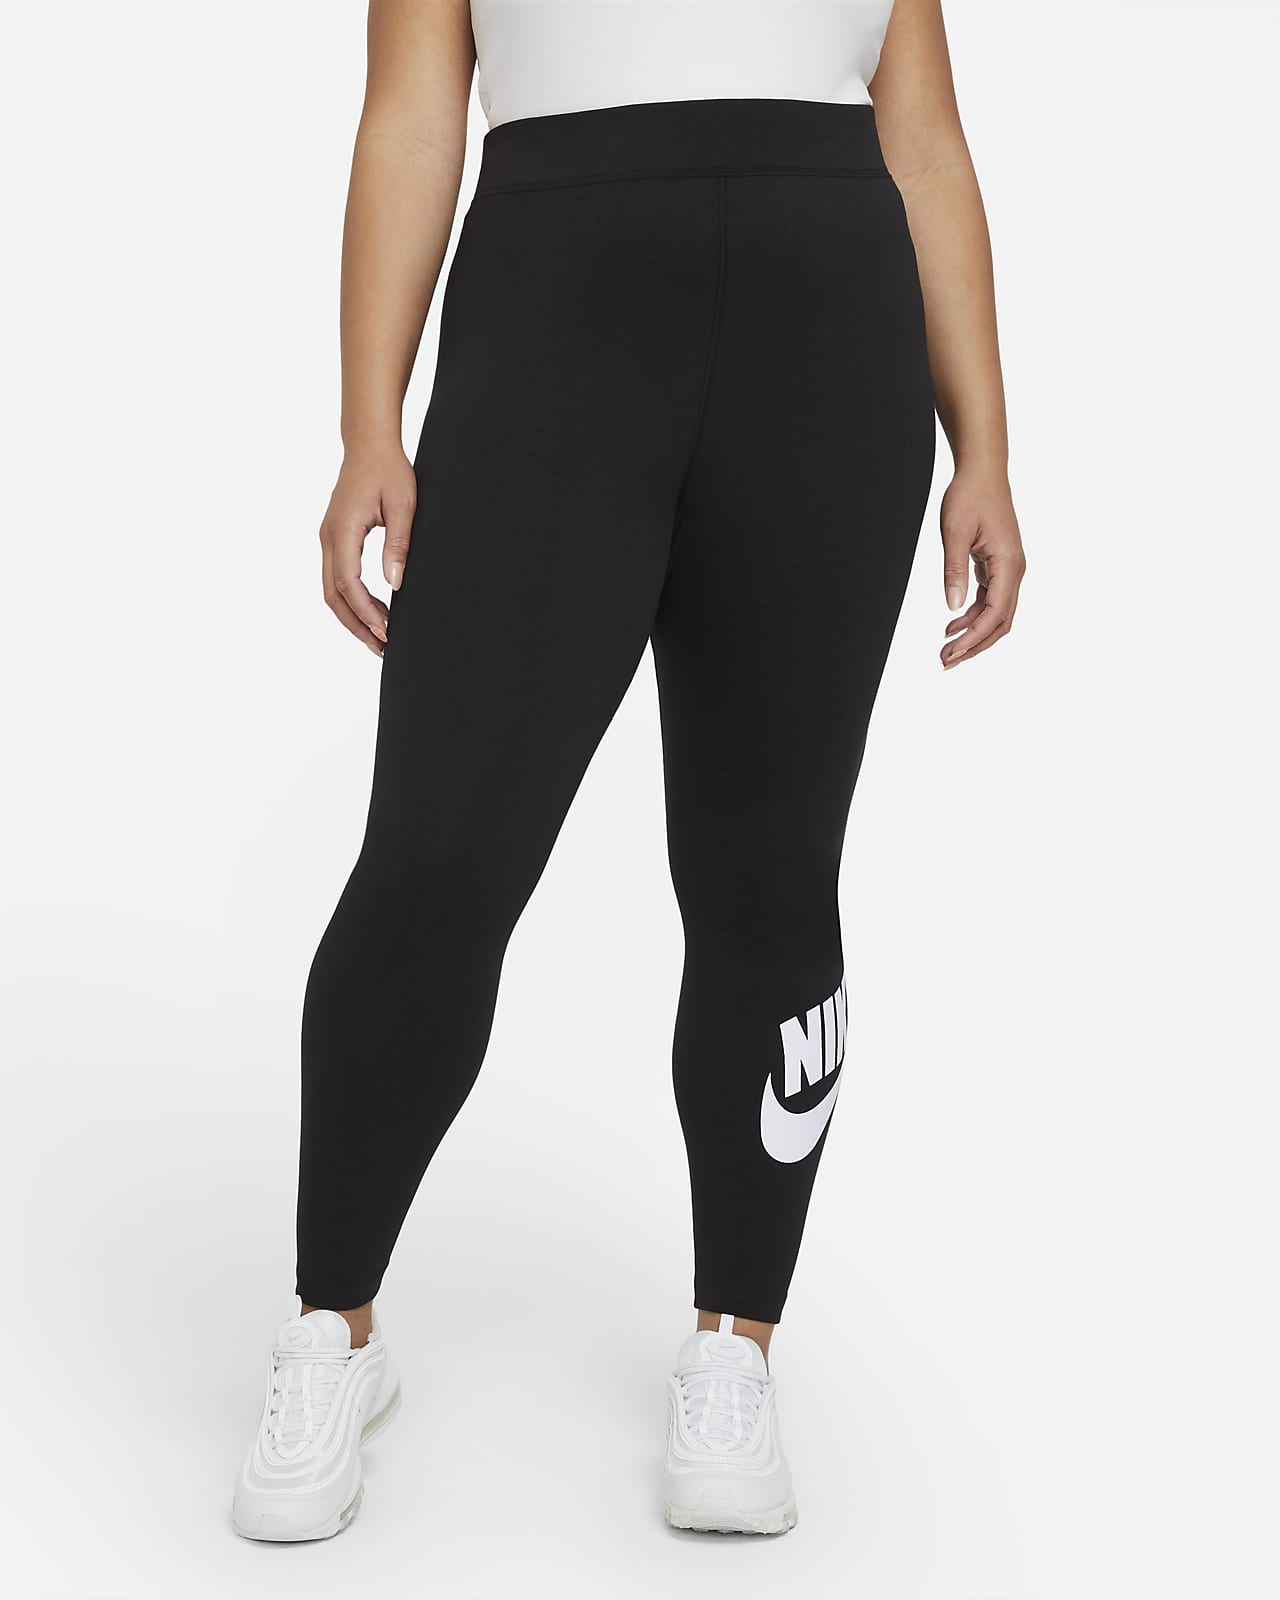 Nike Plus Size 3X Women's Nike Pro Cropped Leggings